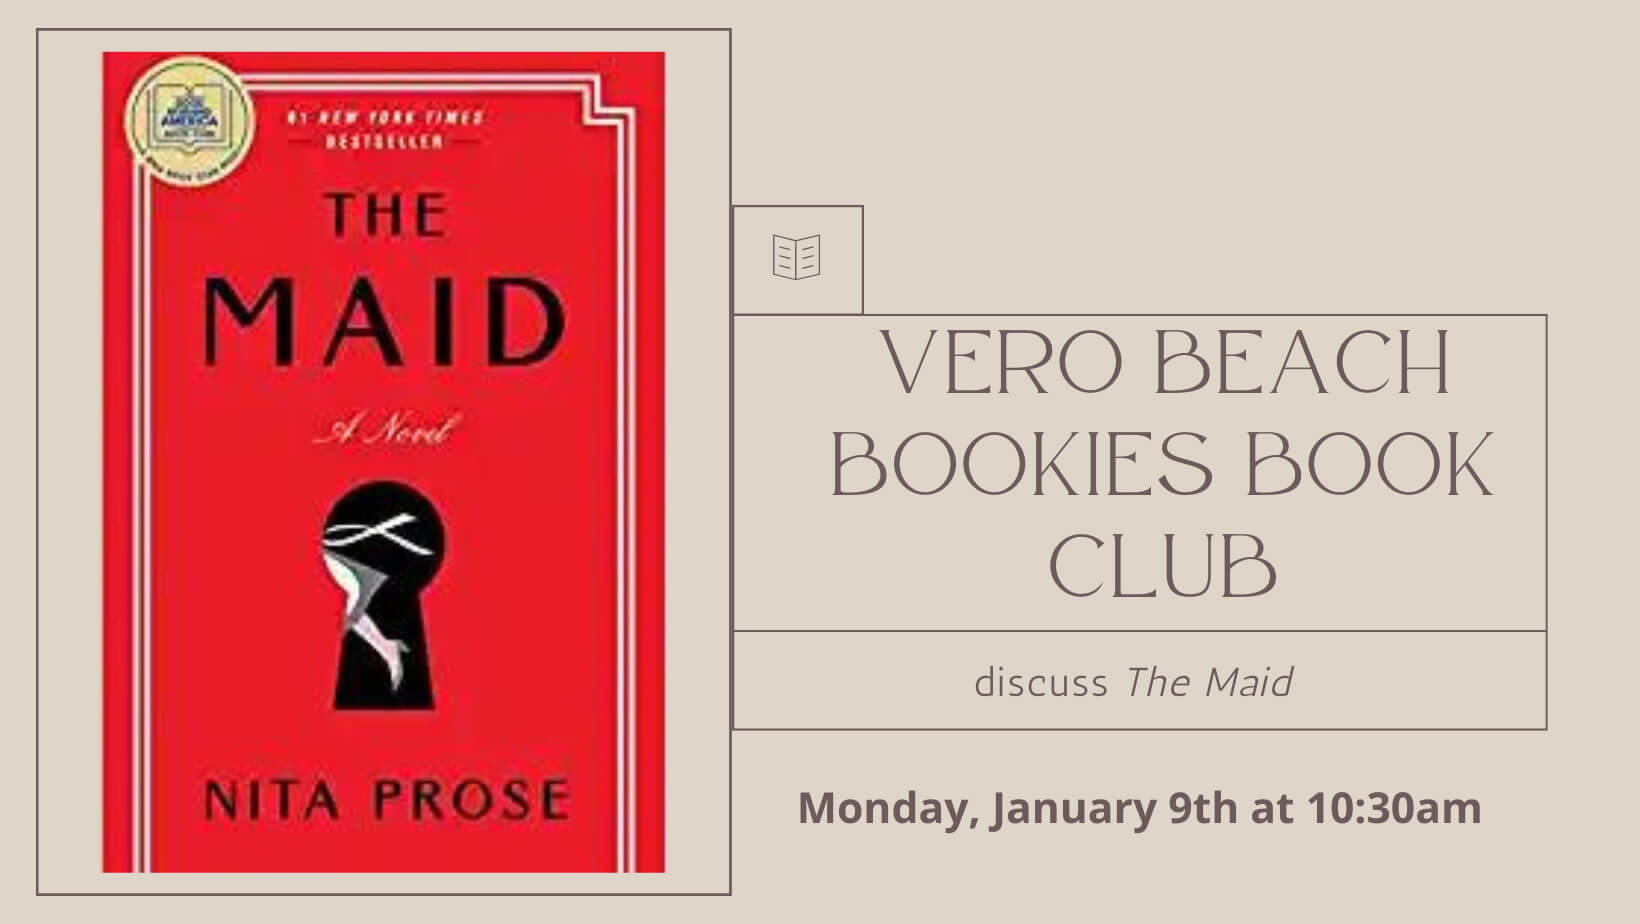 Vero Beach Book Club discusses The Maid